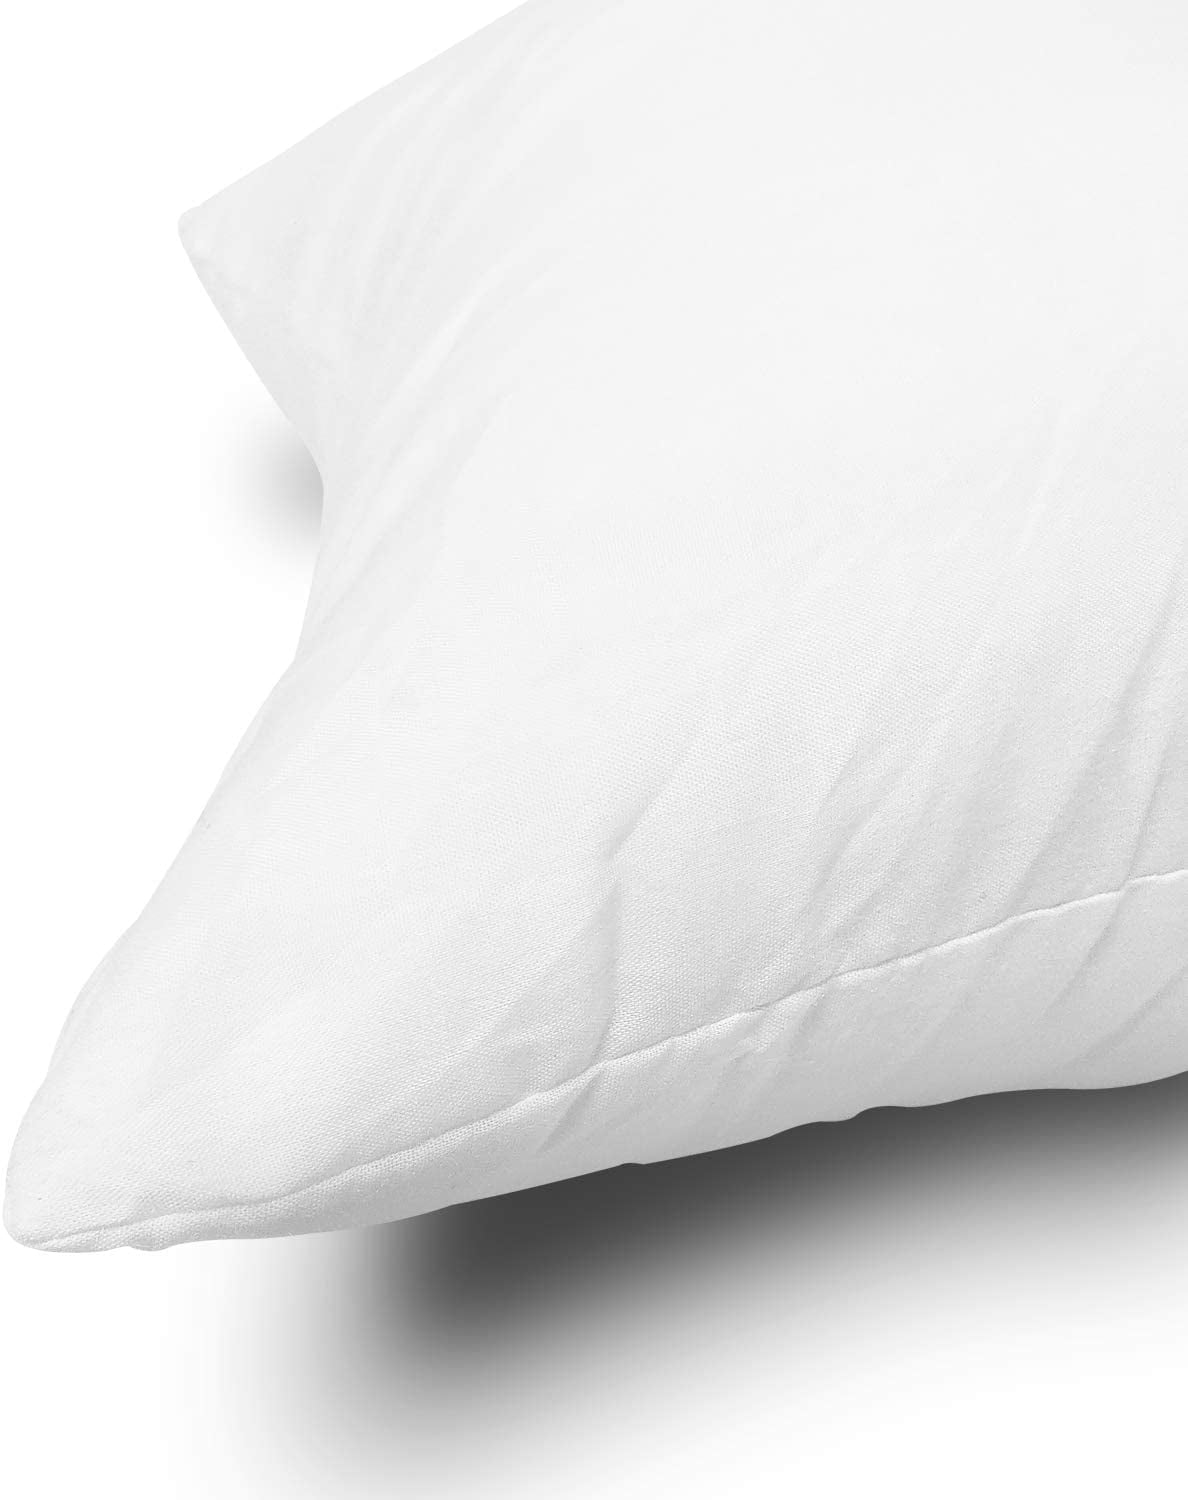 EDOW Throw Pillow Insert, Lightweight Soft Polyester Down Alternative  Decorative Pillow, Sham Stuffer, Machine Washable. (White, 18x18)